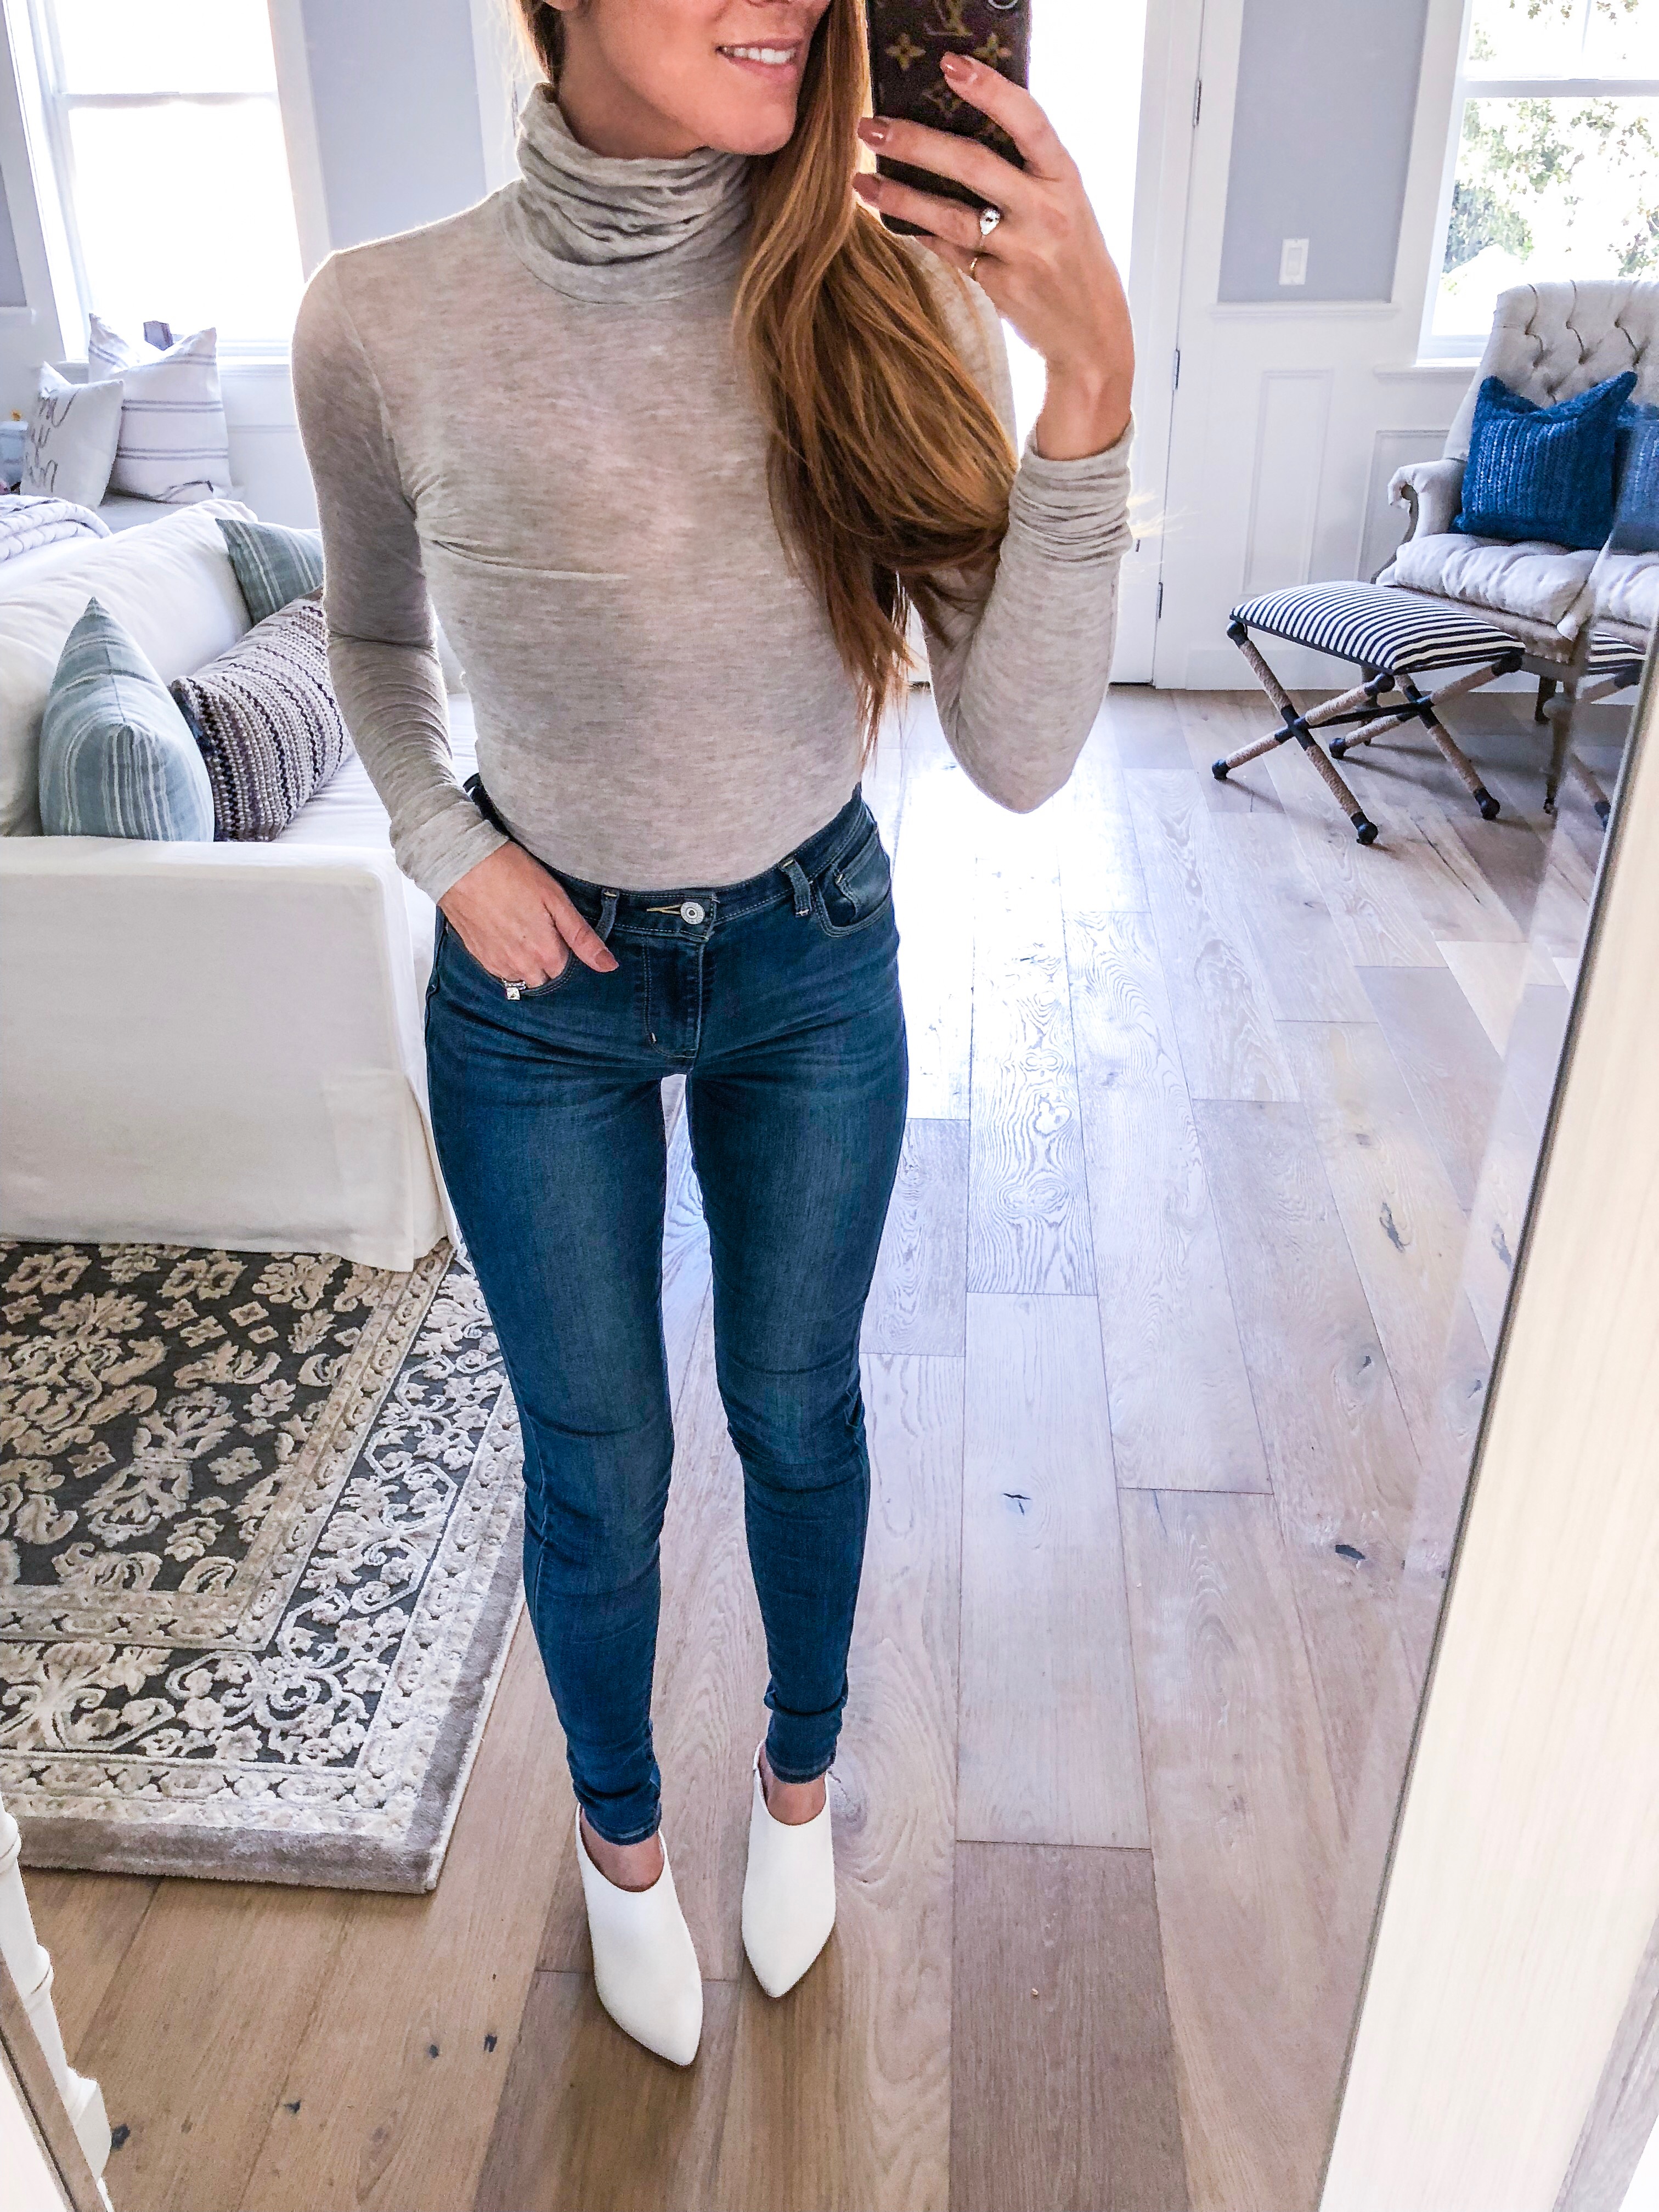 5 Ways to Style Skinny Jeans